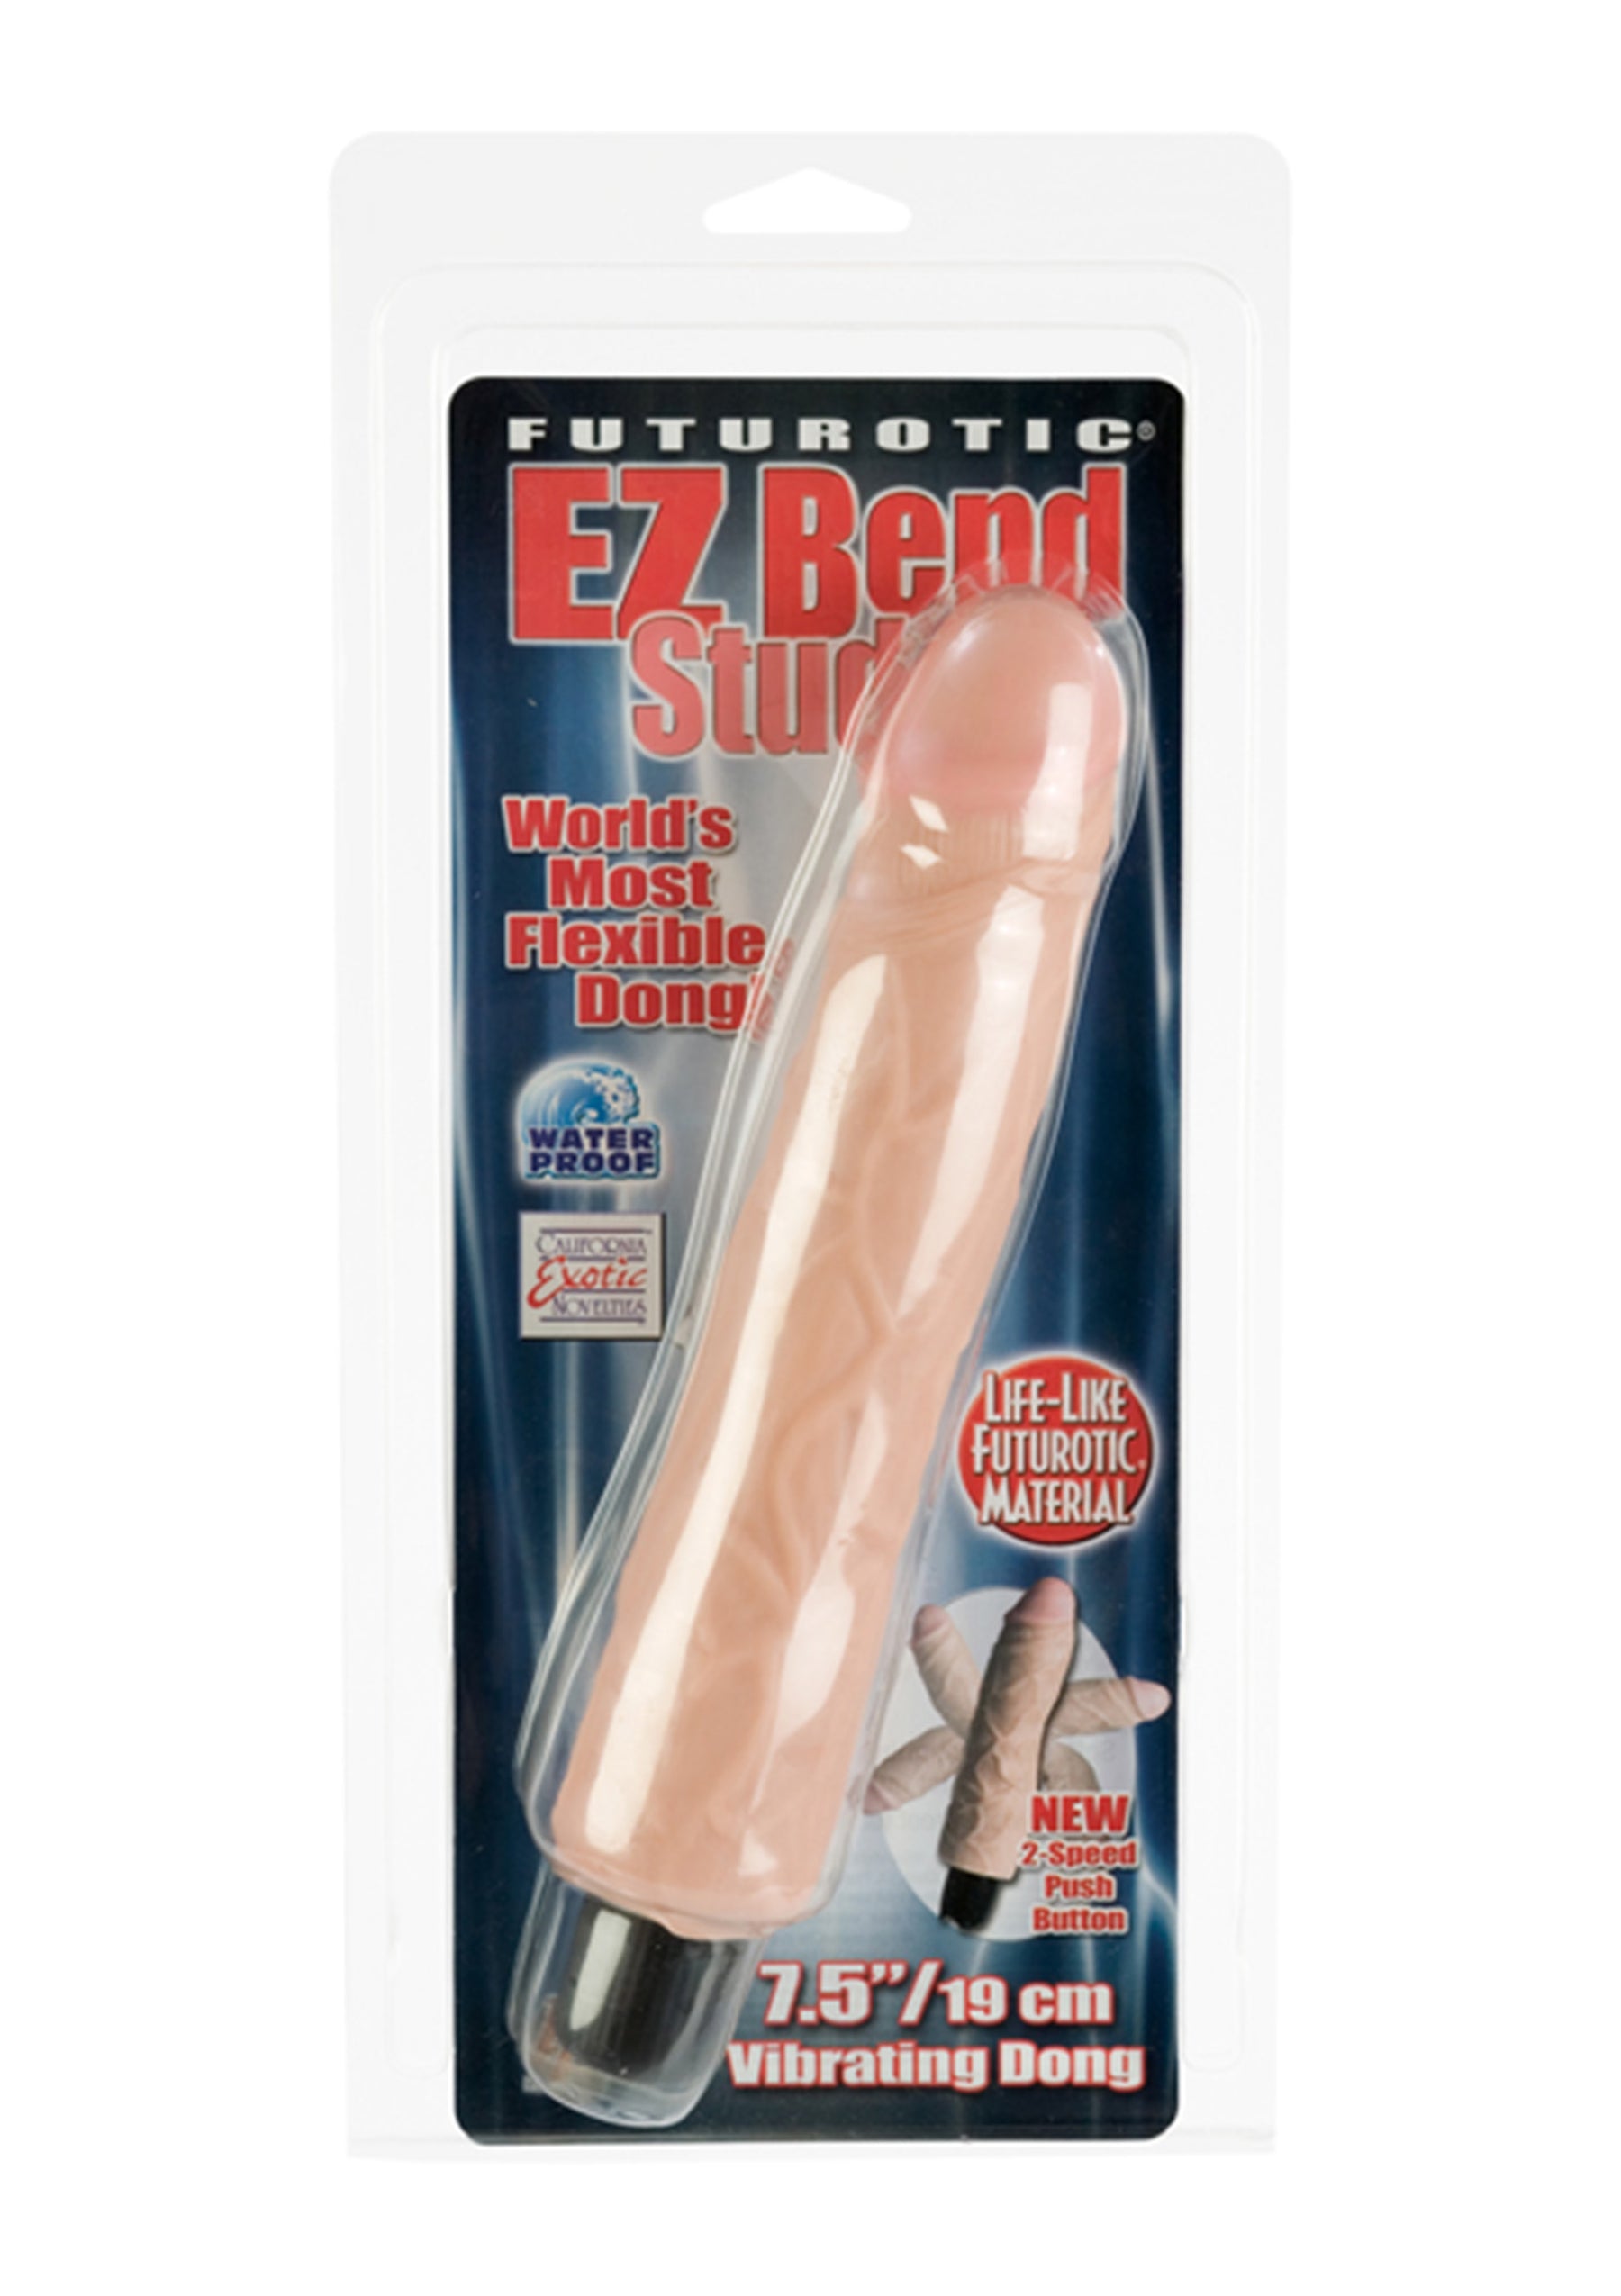 Futurotic E-Z Bend Stud 7.5-erotic-world-munchen.myshopify.com